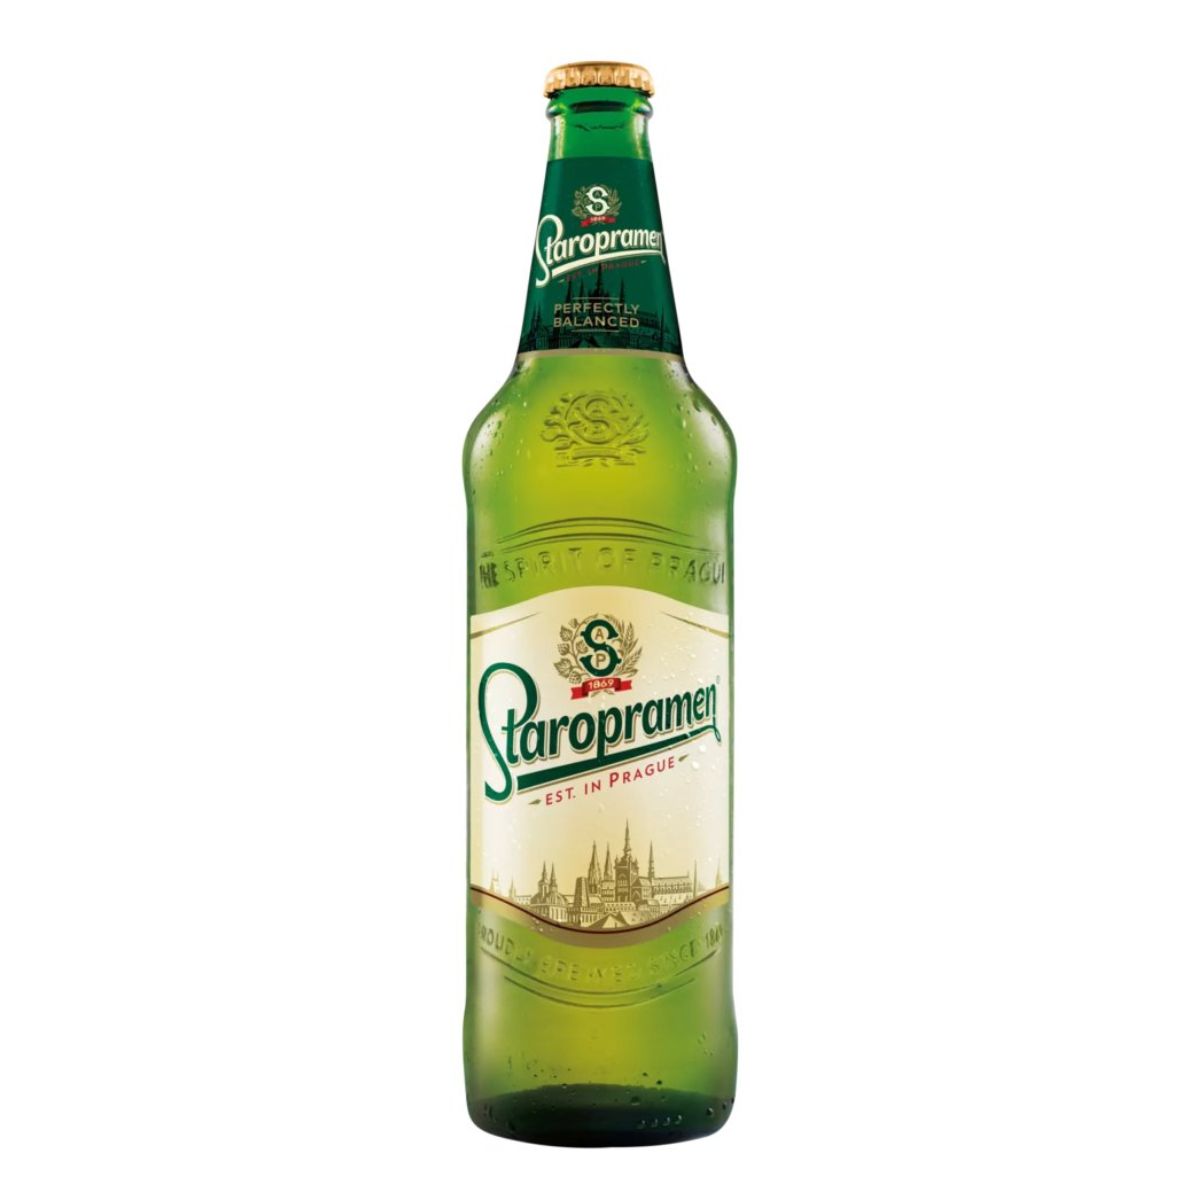 A bottle of Staropramen - Premium Czech Lager (5% ABV) - 660ml beer on a white background.